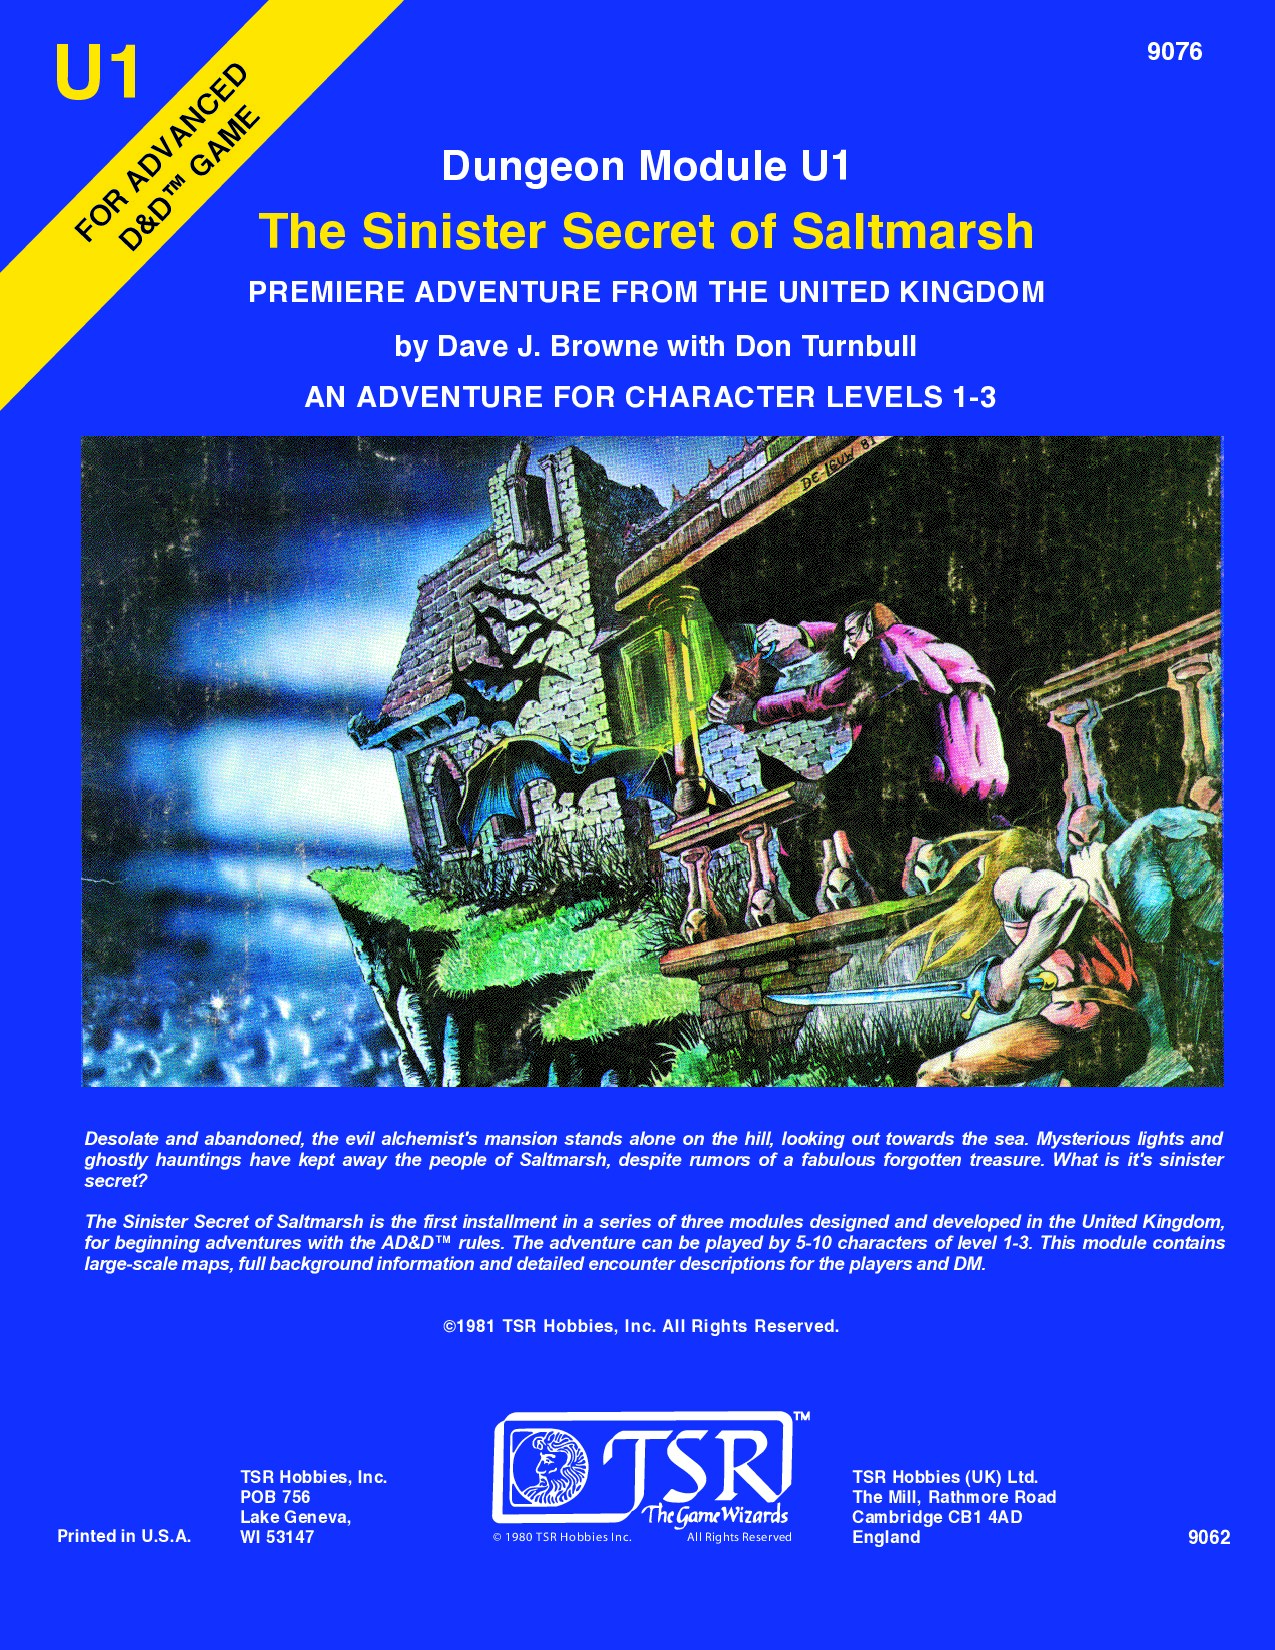 Dungeon Module U1 - The Sinister Secret of Saltmarsh